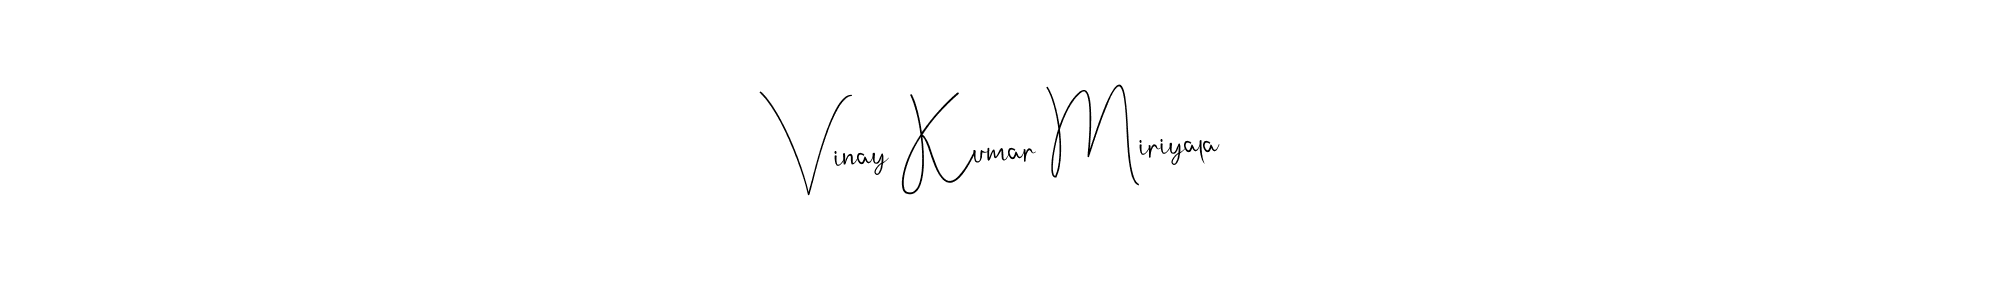 How to Draw Vinay Kumar Miriyala signature style? Andilay-7BmLP is a latest design signature styles for name Vinay Kumar Miriyala. Vinay Kumar Miriyala signature style 4 images and pictures png